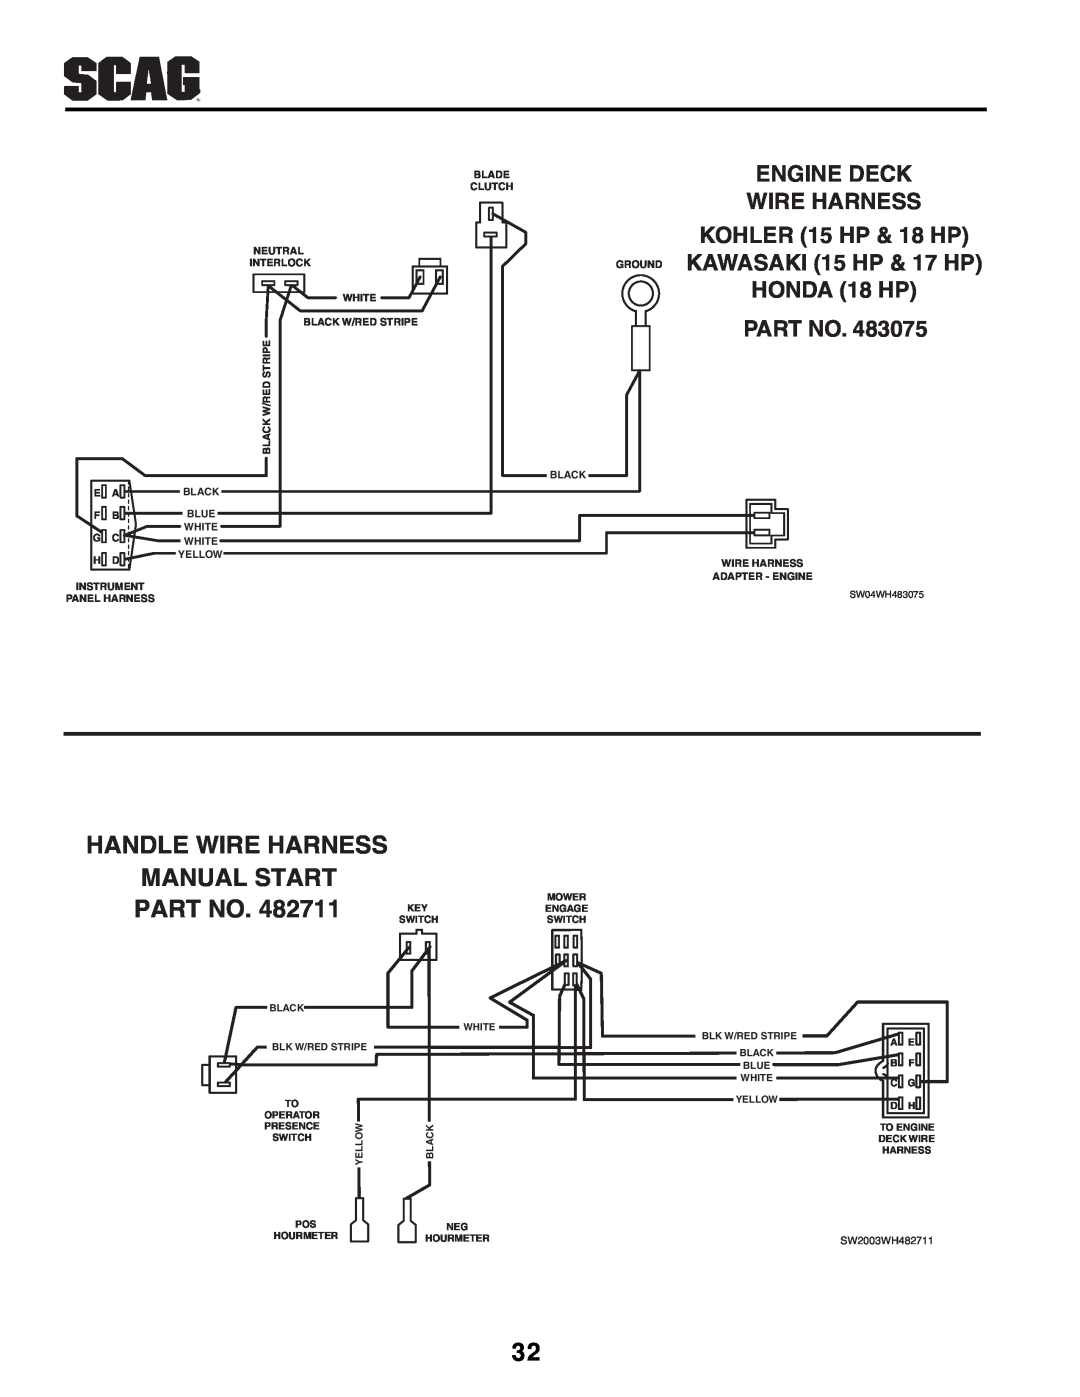 Scag Power Equipment SW manual Handle Wire Harness Manual Start Part No, Engine Deck, KOHLER 15 HP & 18 HP, HONDA 18 HP 